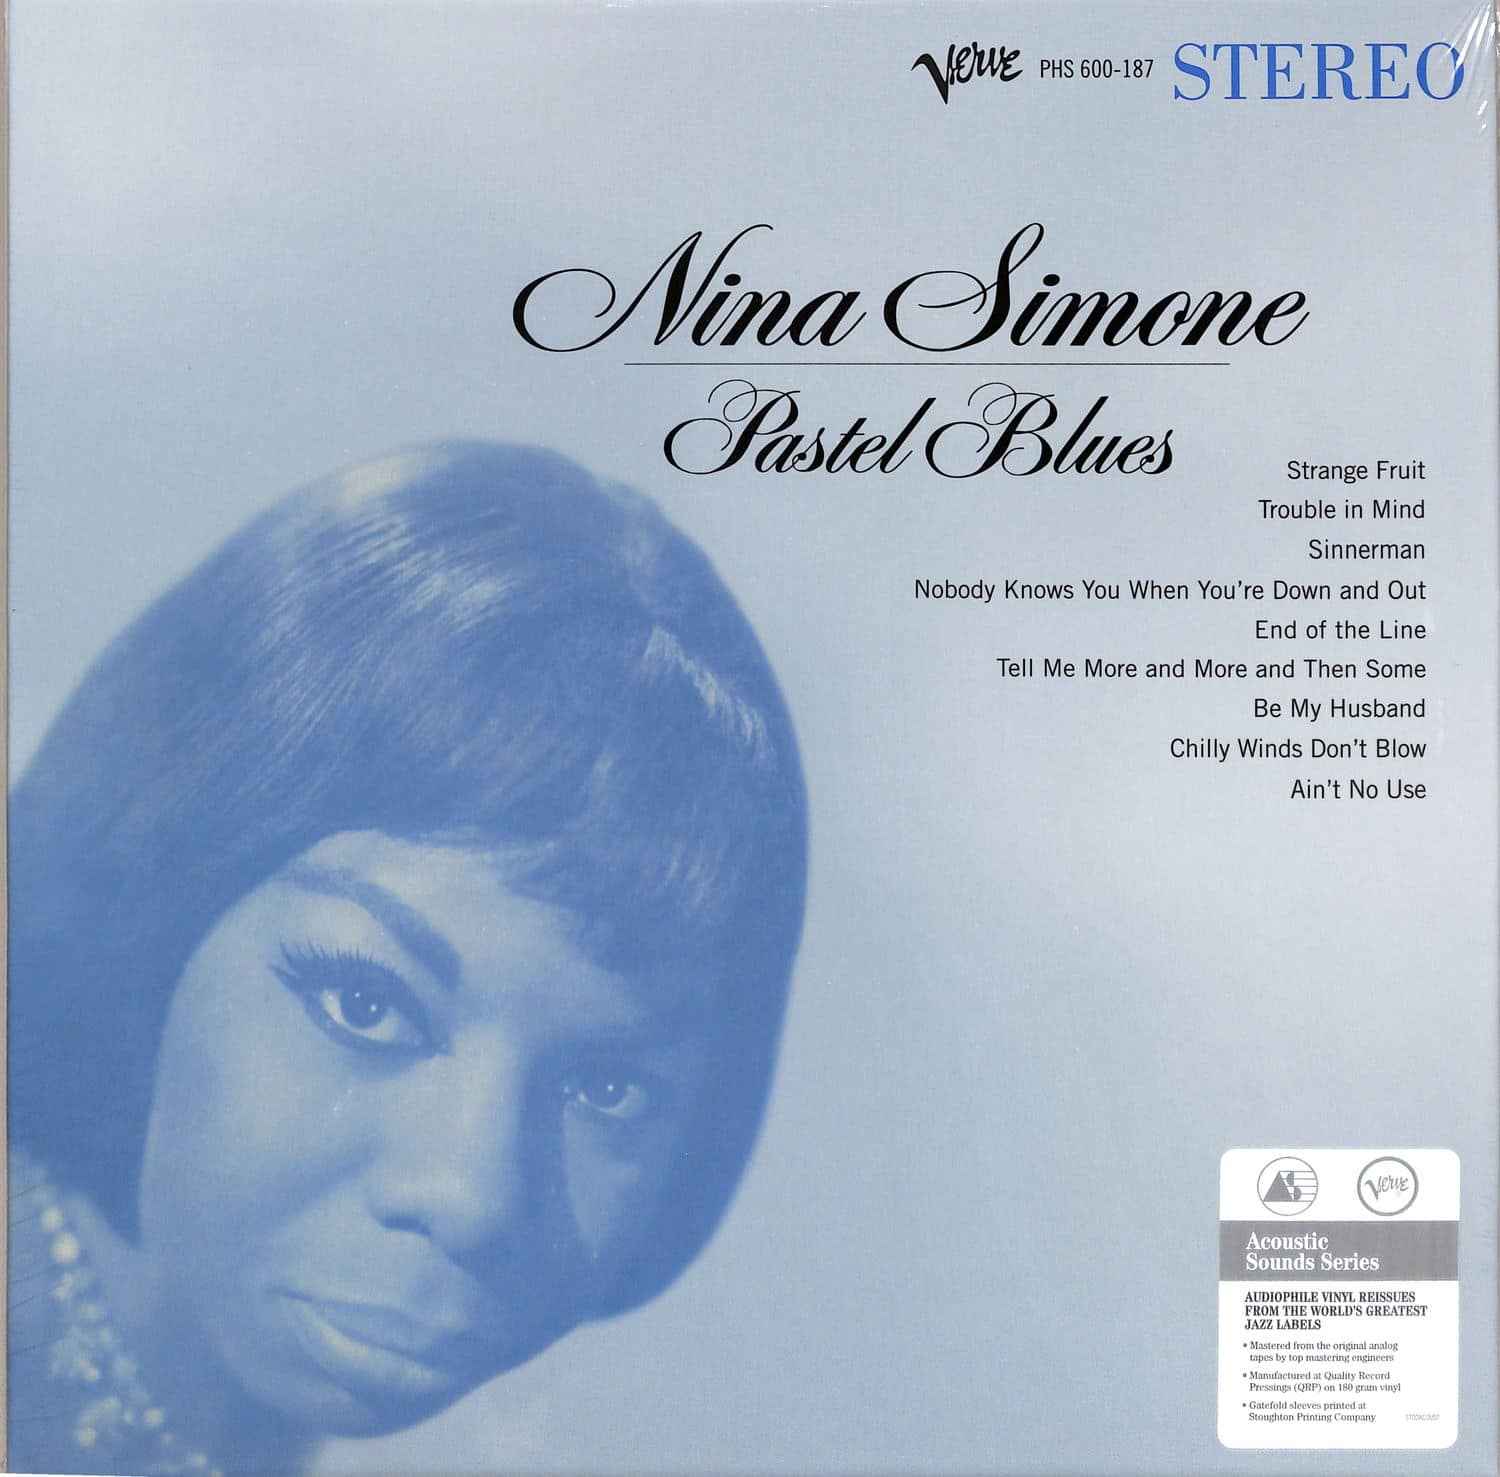 Nina Simone - PASTEL BLUES 